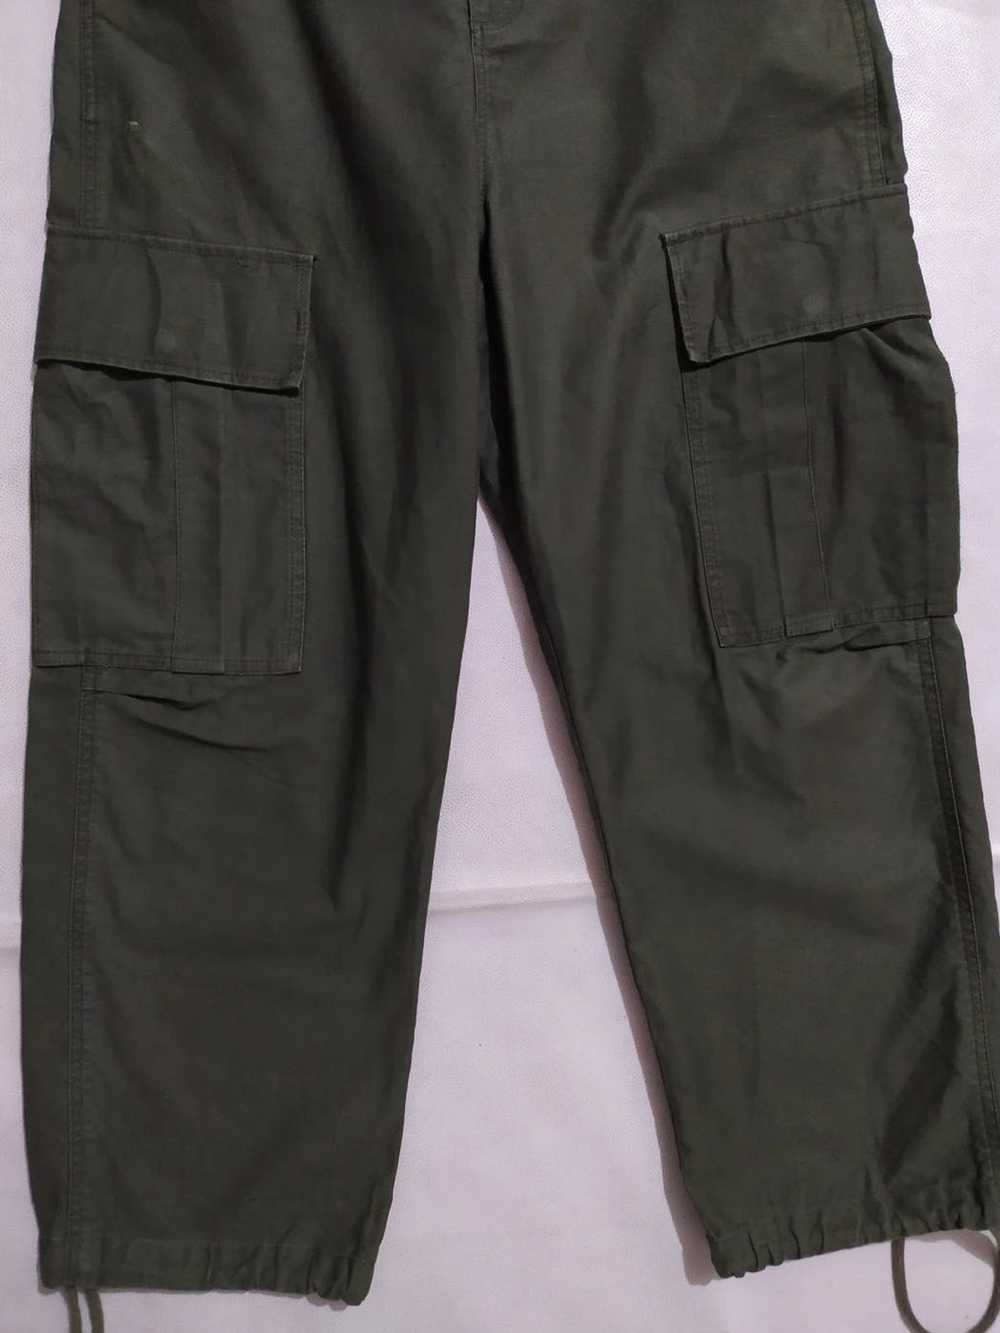 Japanese Brand Cargo Pants - image 3